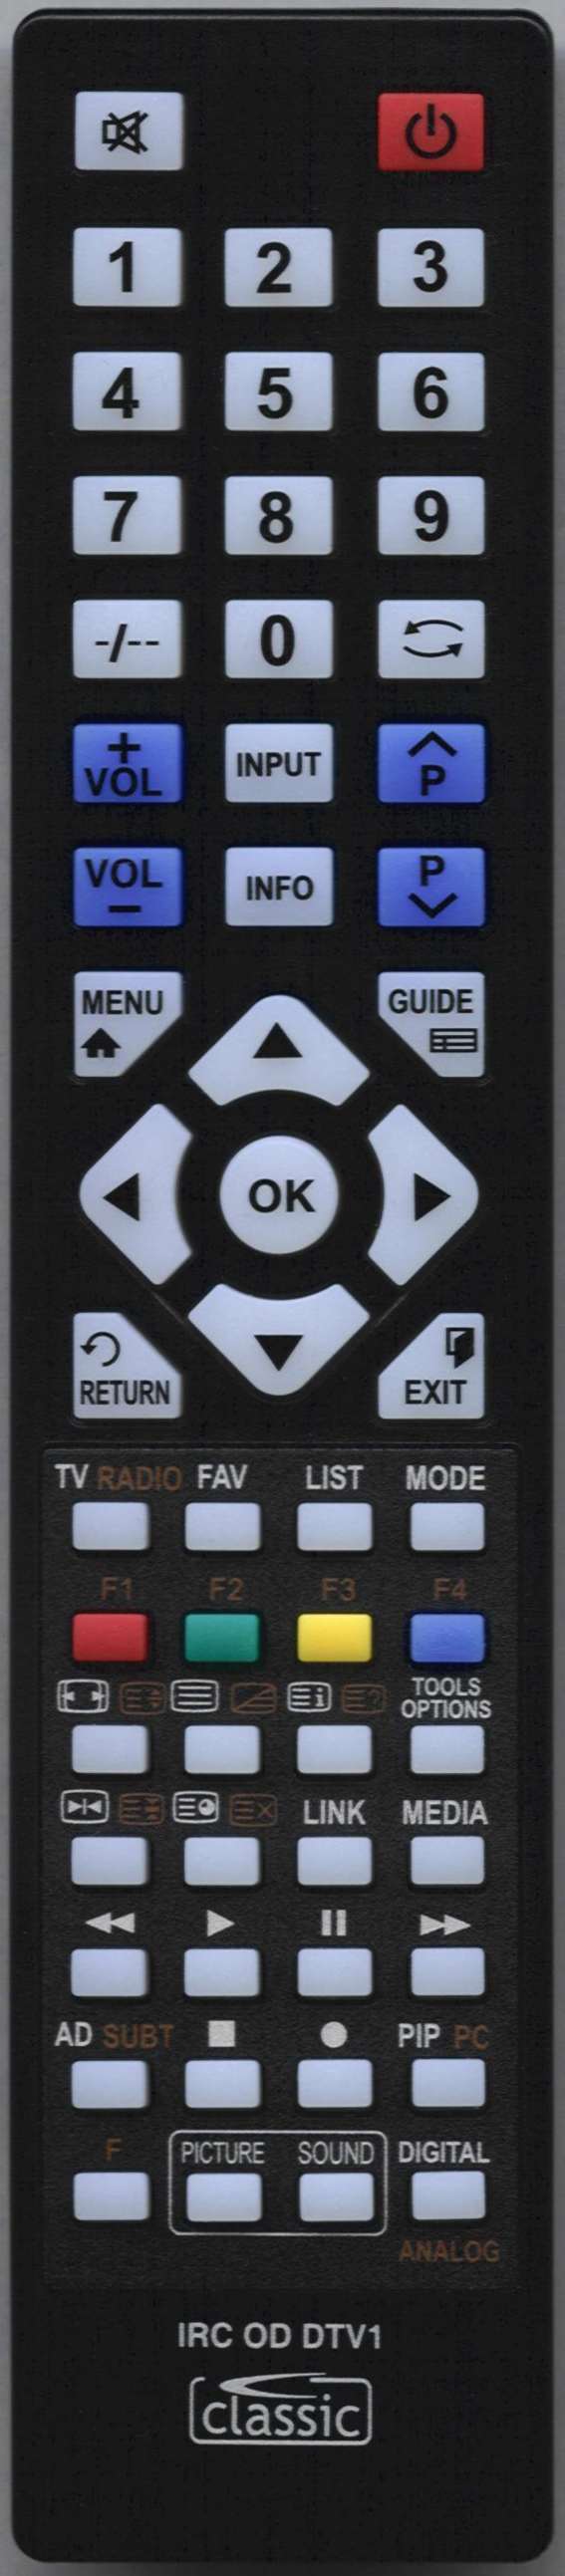 PANASONIC TX40C300B Remote Control Alternative